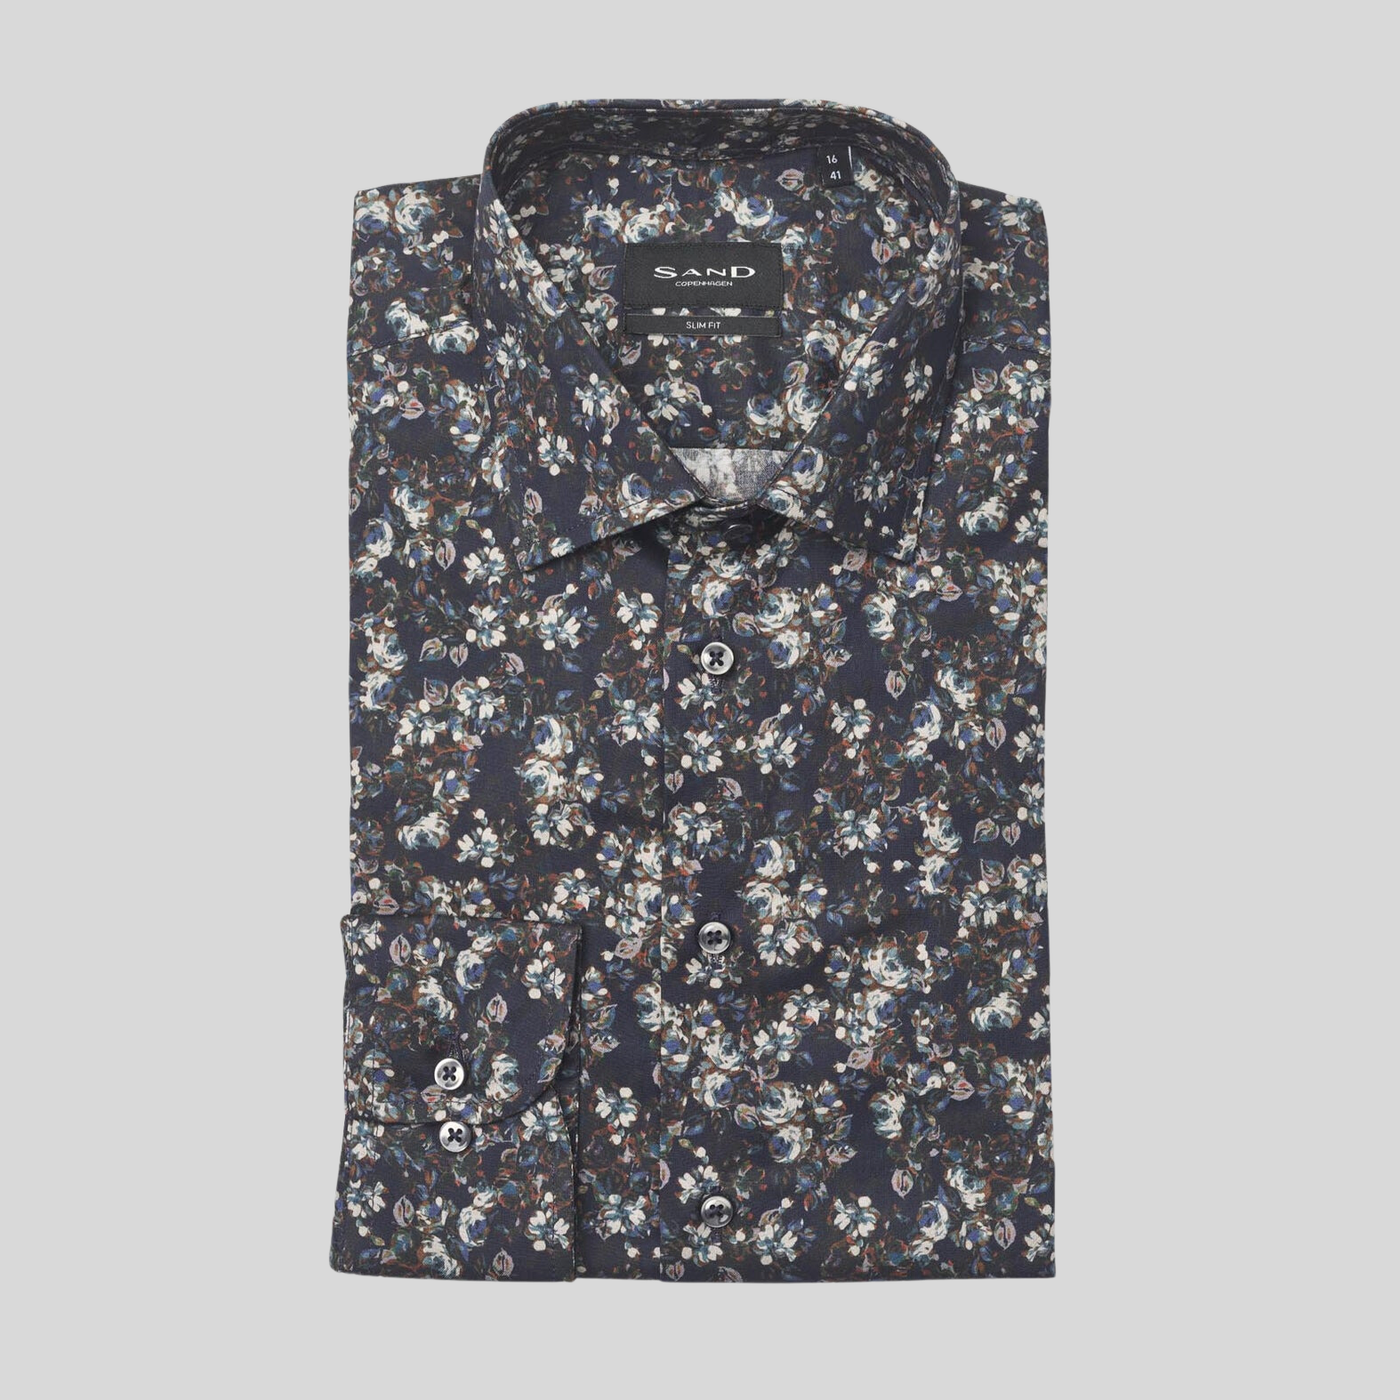 Gotstyle Fashion - Sand Collar Shirts Watercolour Floral Print Twill Shirt - Navy